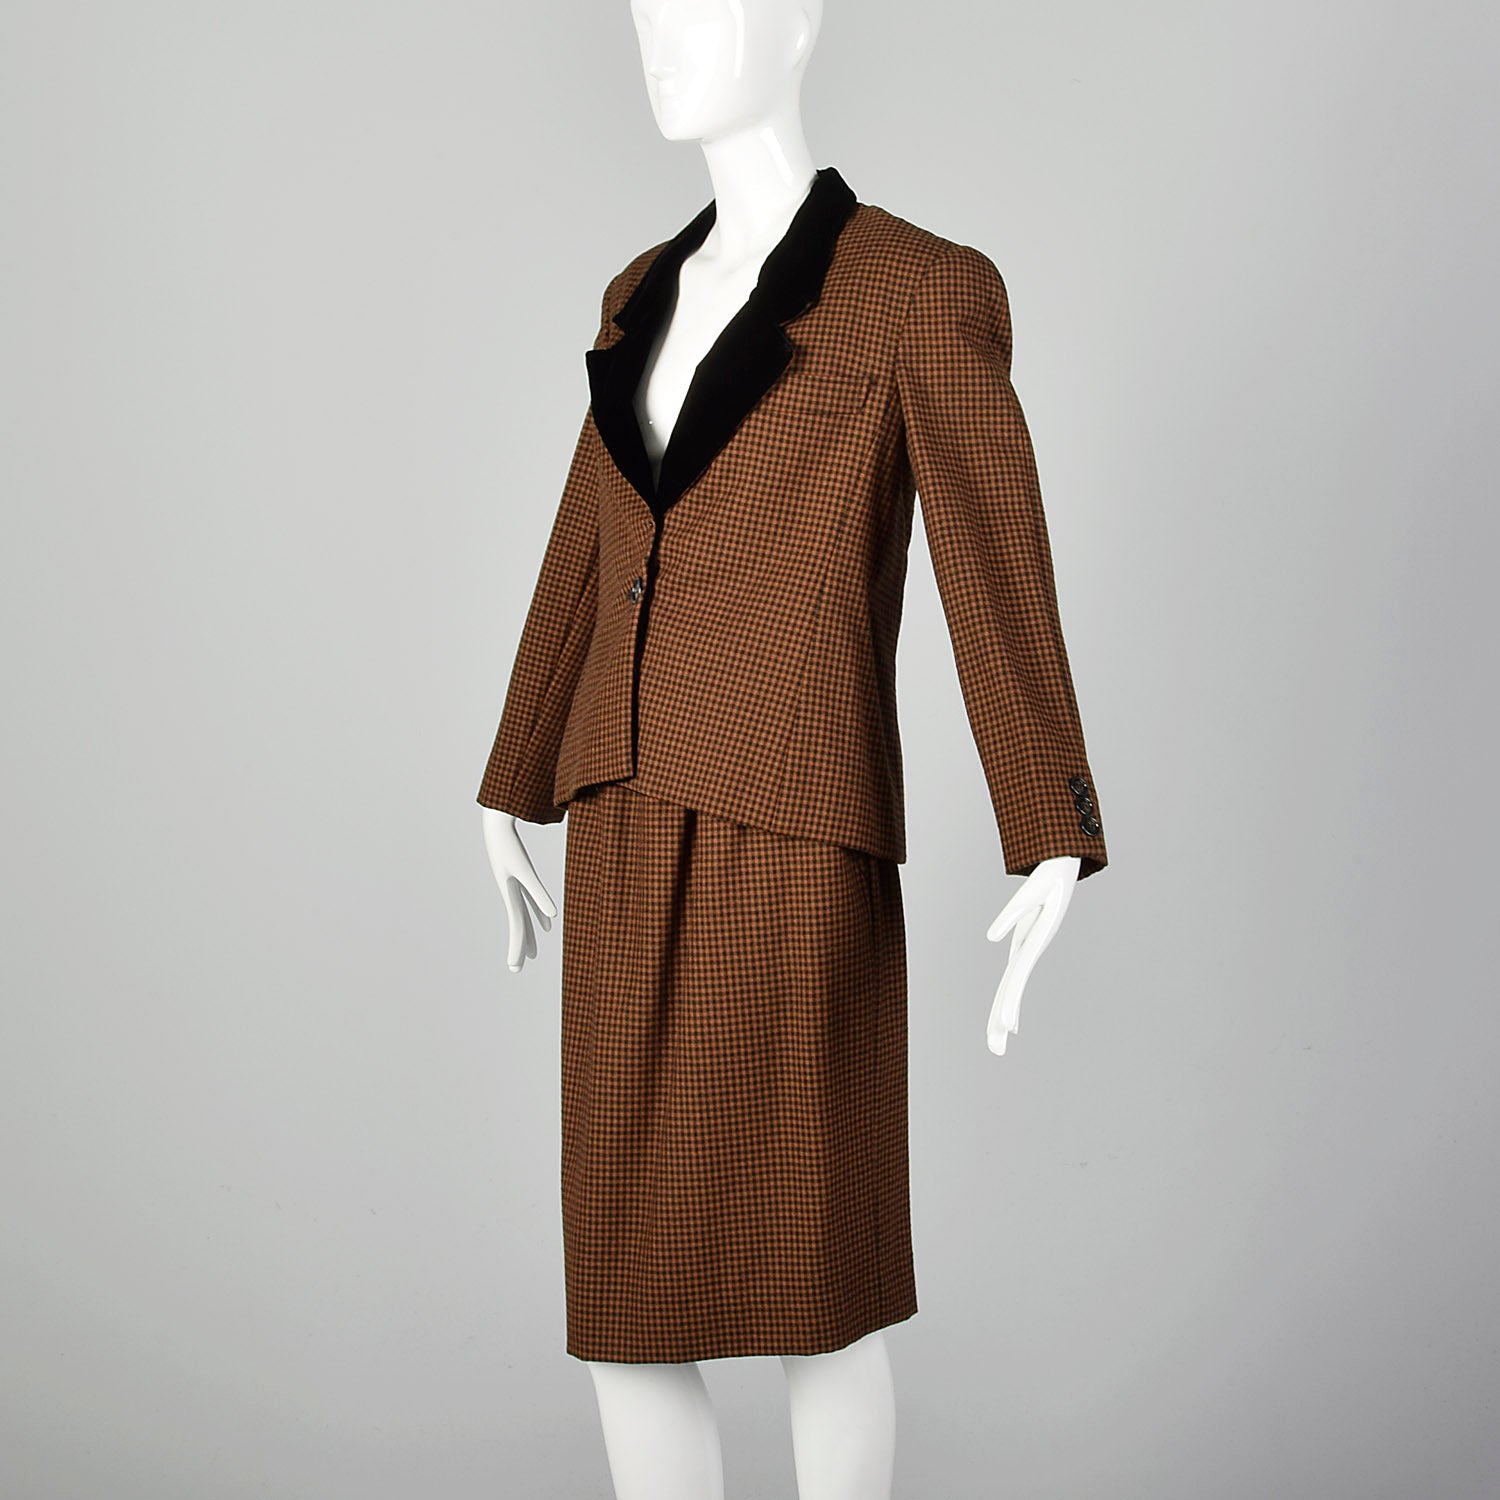 Small 1980s Oscar de la Renta Black and Brown Skirt Suit